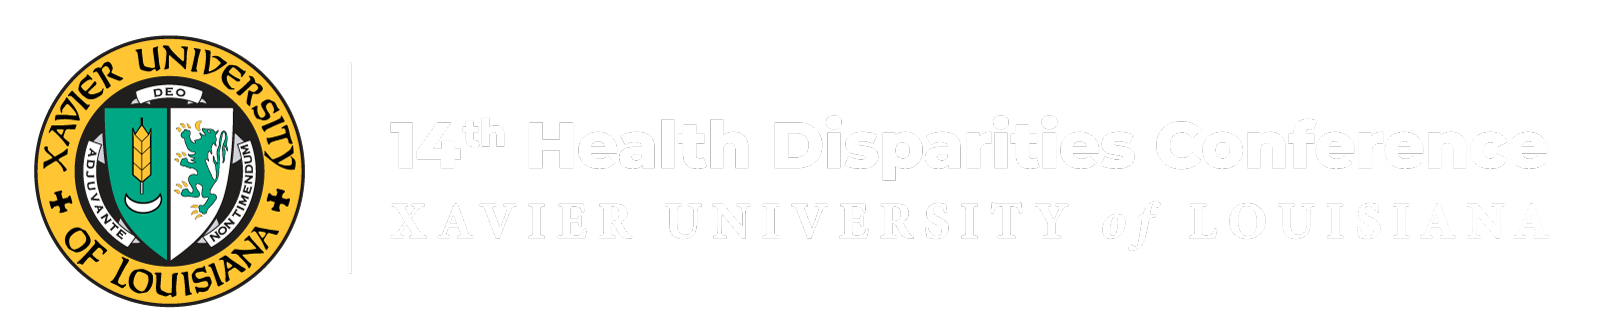 14th Health Dispariites Conference